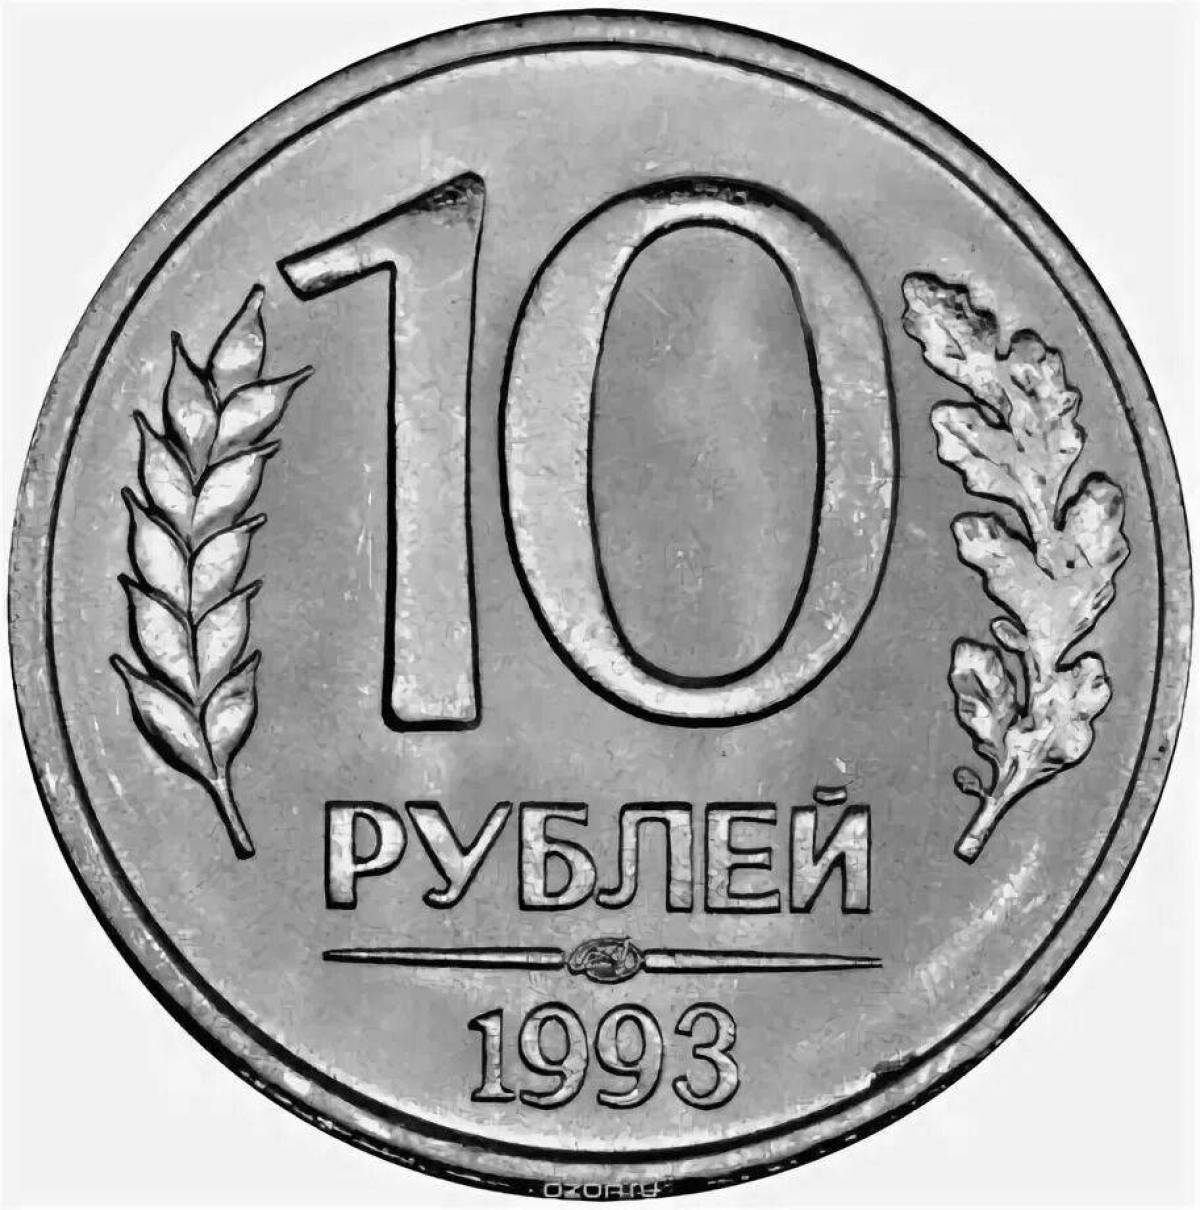 Раскраска 10 рублей, залитая цветом